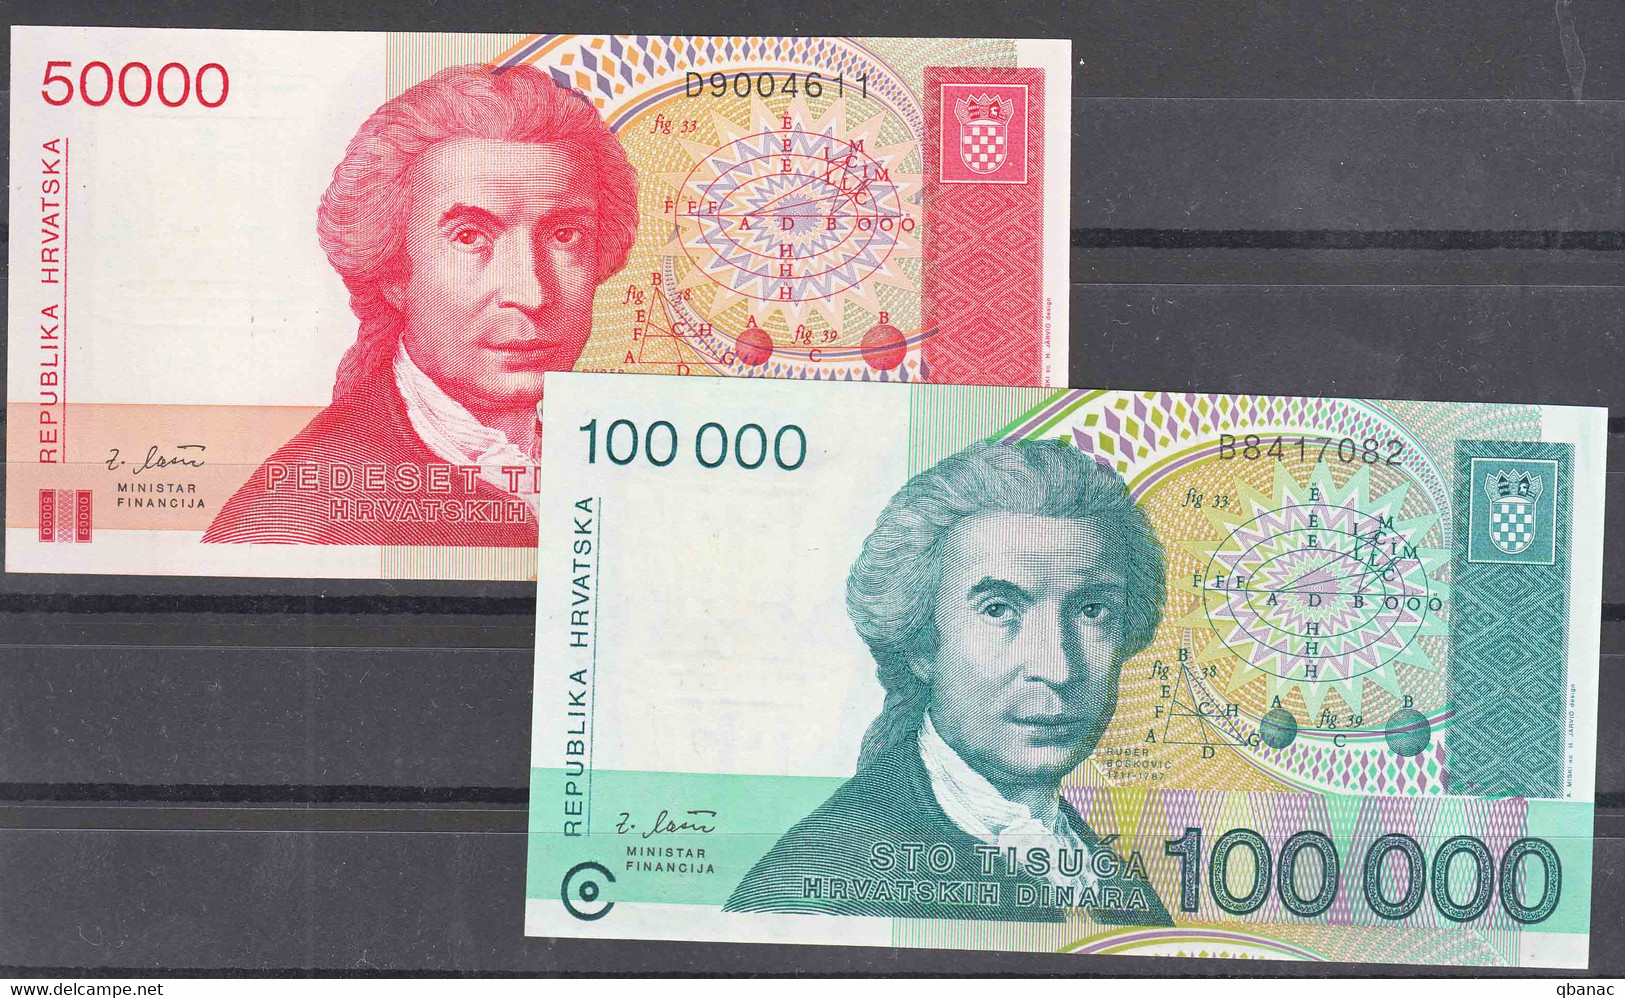 Croatia 1993 50000 And 100000 Dinara, UNC - Croacia